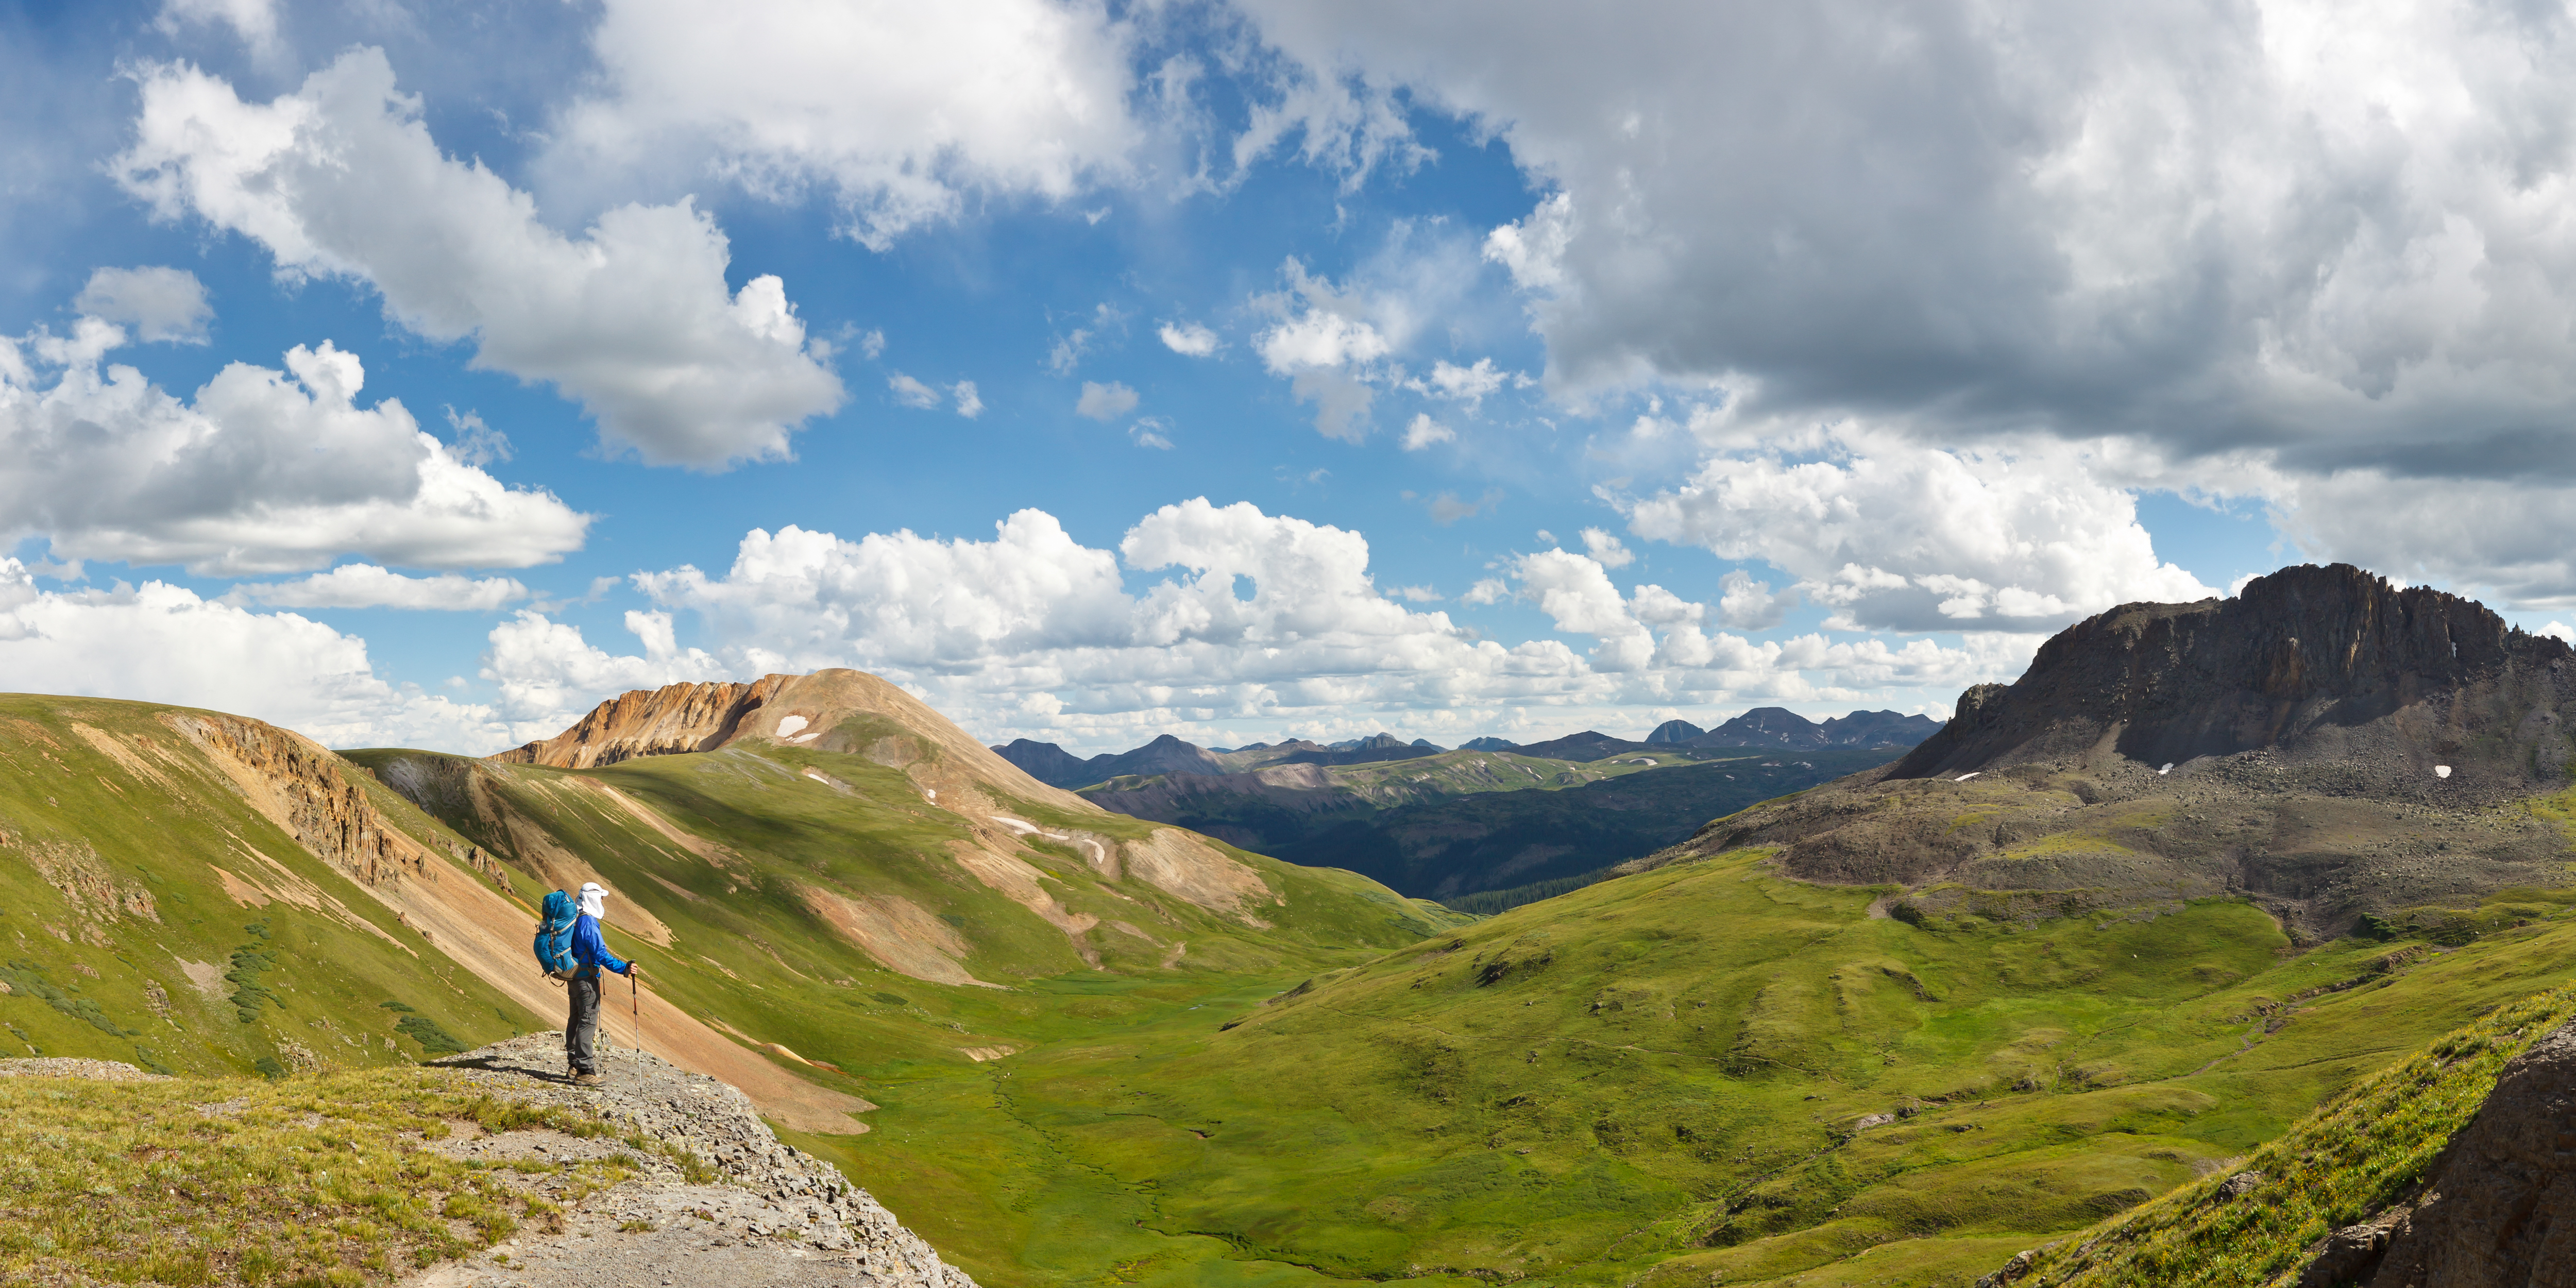 Enjoying the view across Colorado’s alpine tundra. Photo Patrick Poendl, Shutterstock